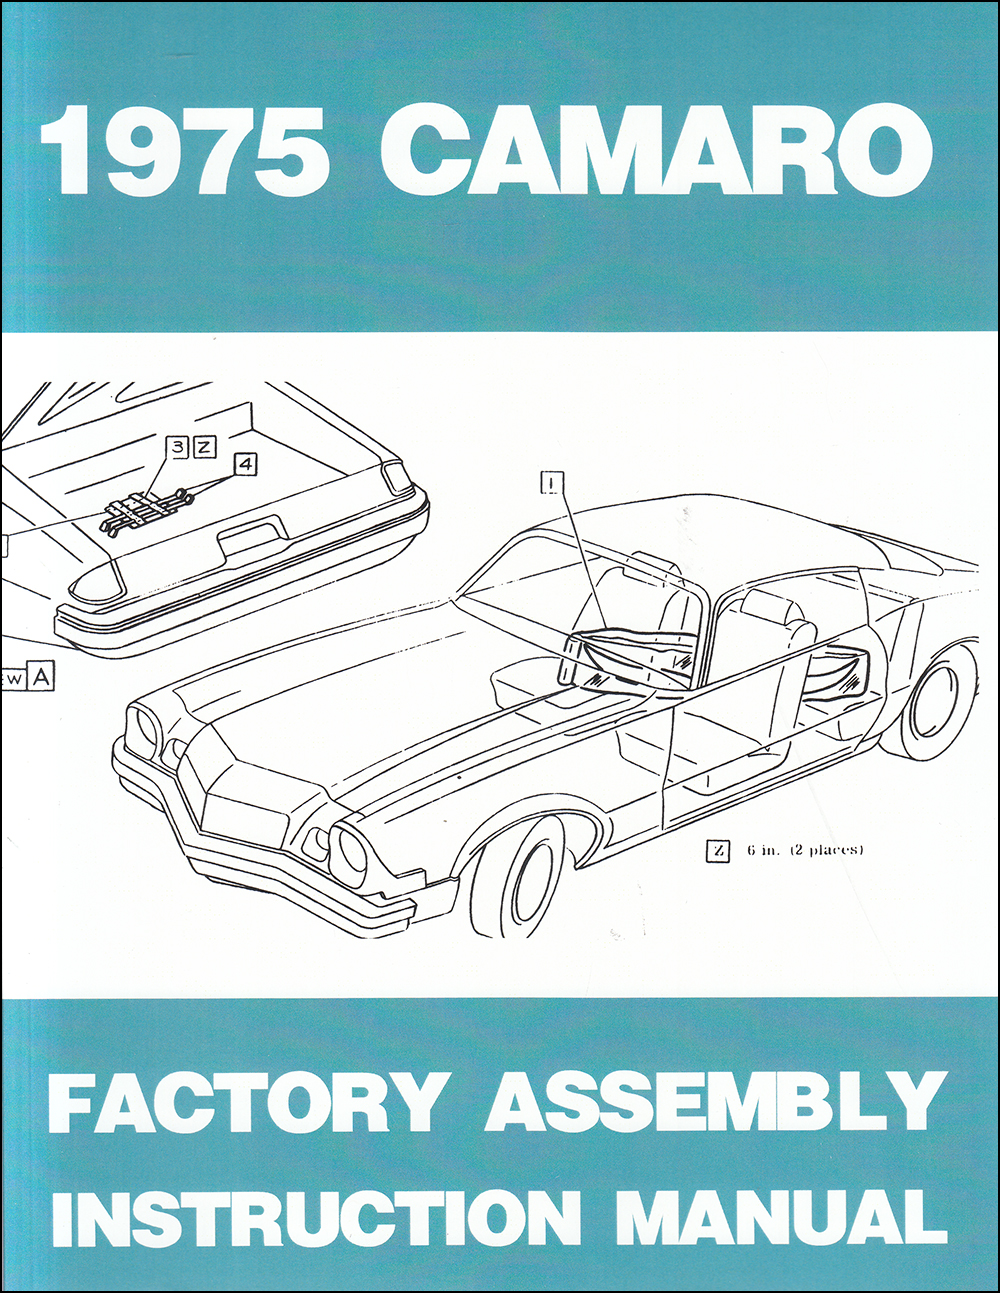 1975 Camaro Factory Assembly Manual Reprint